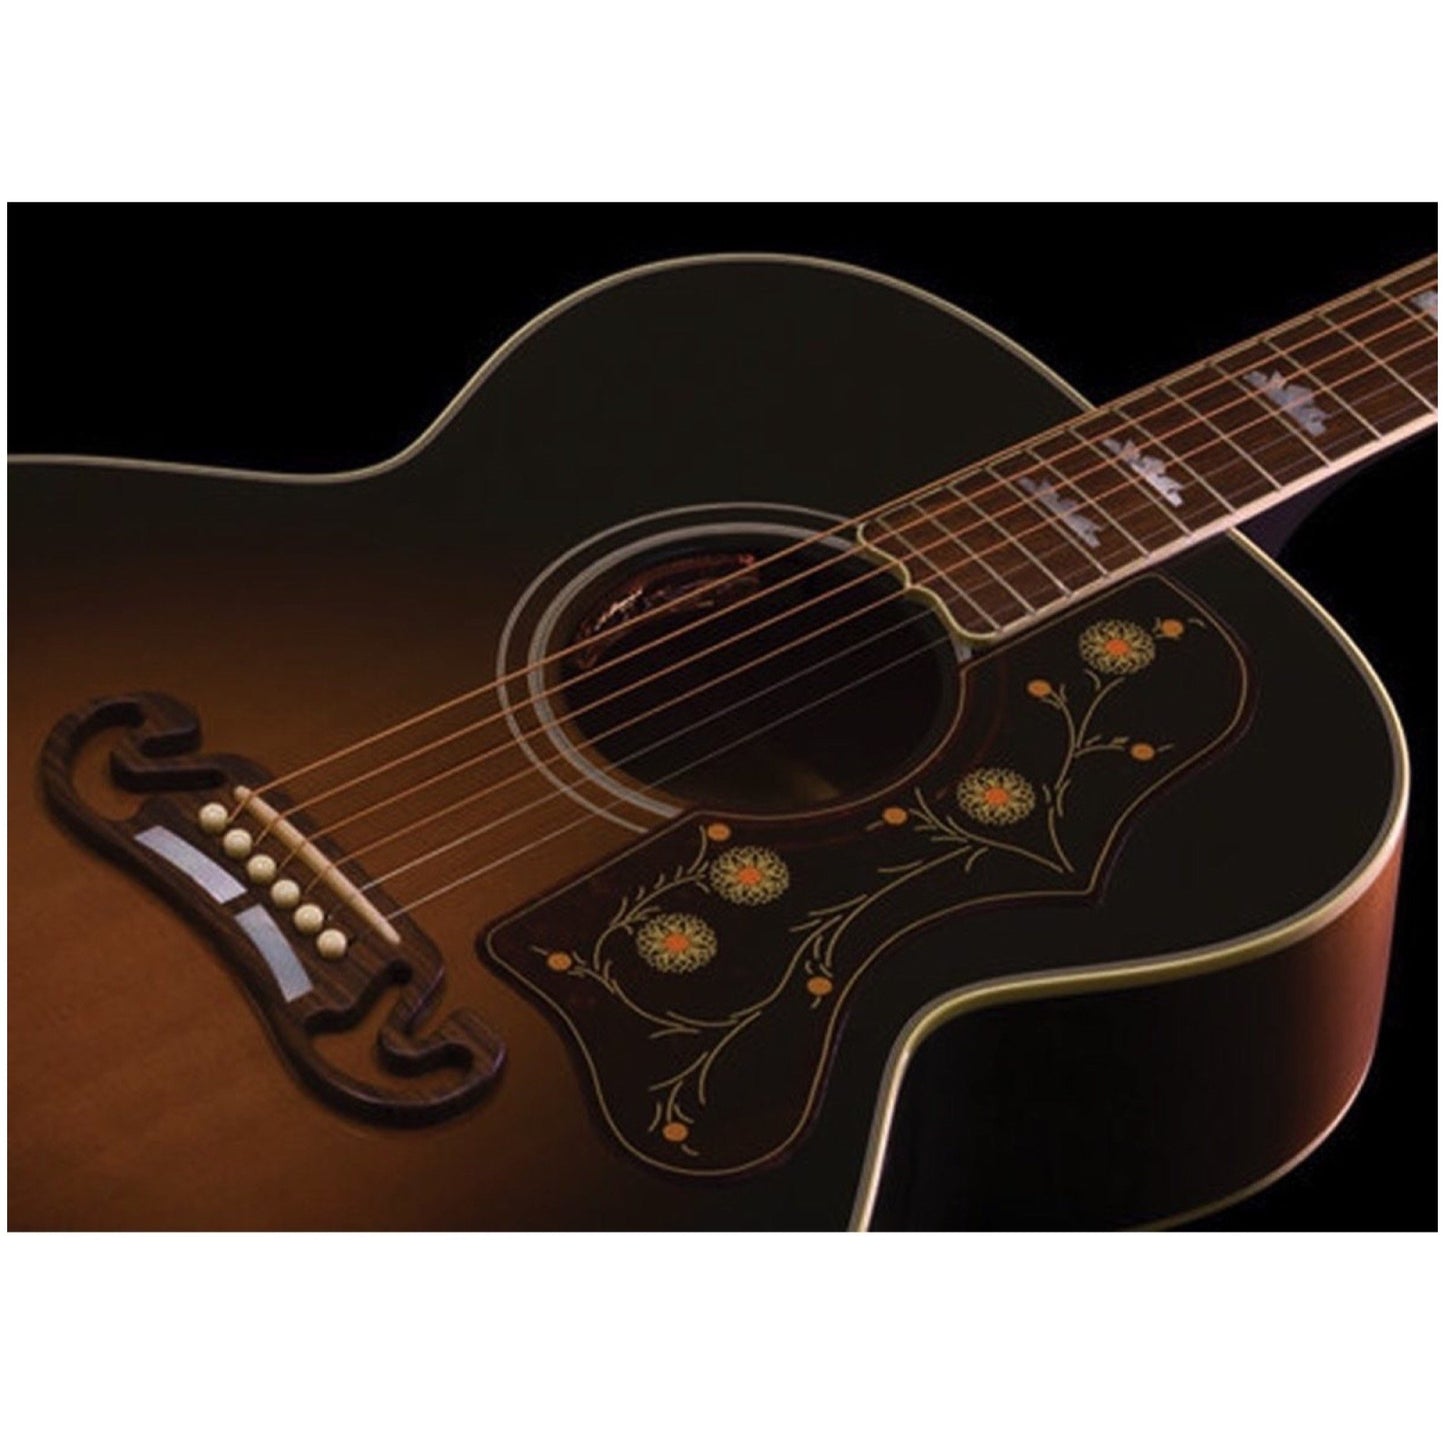 LR Baggs Session VTC Acoustic Guitar Pickup System